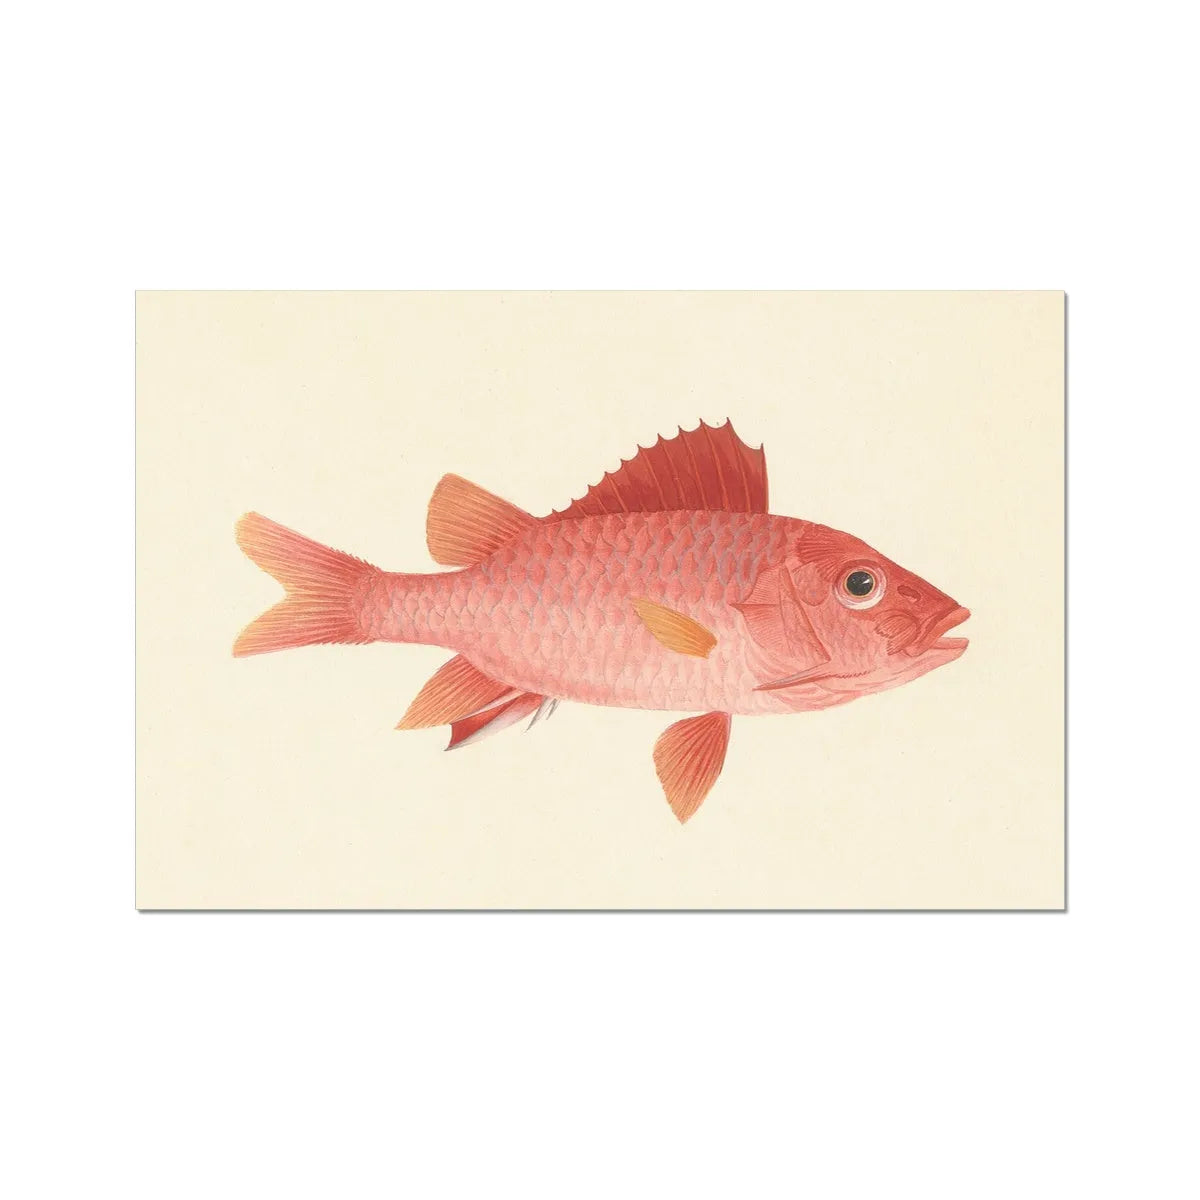 This Fish By Luigi Balugani Fine Art Print - 24’x16’ - Posters Prints & Visual Artwork - Aesthetic Art